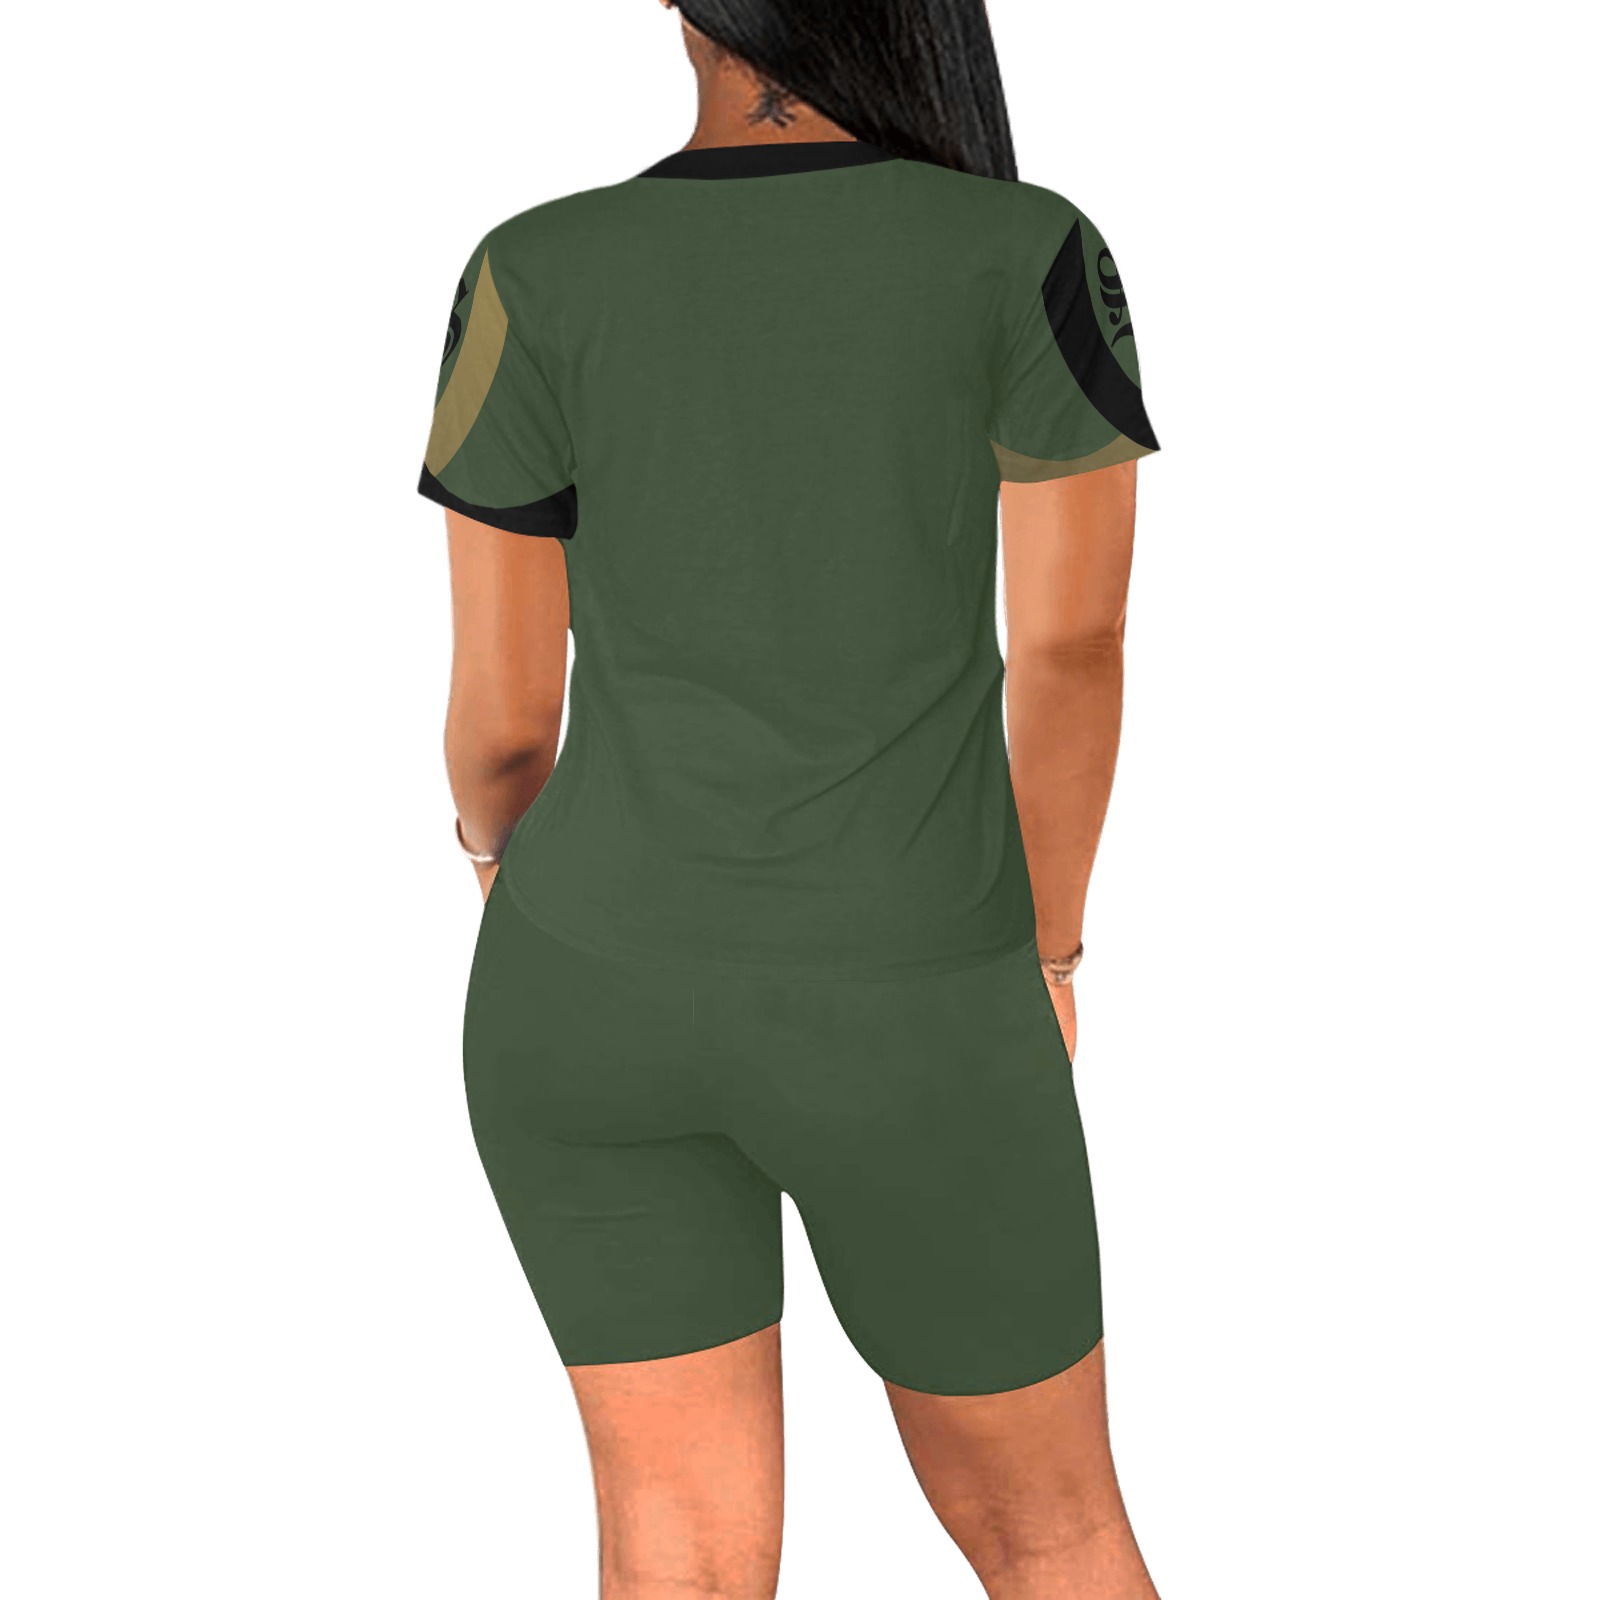 Green Shirt & Shorts set Women's Short Yoga Set